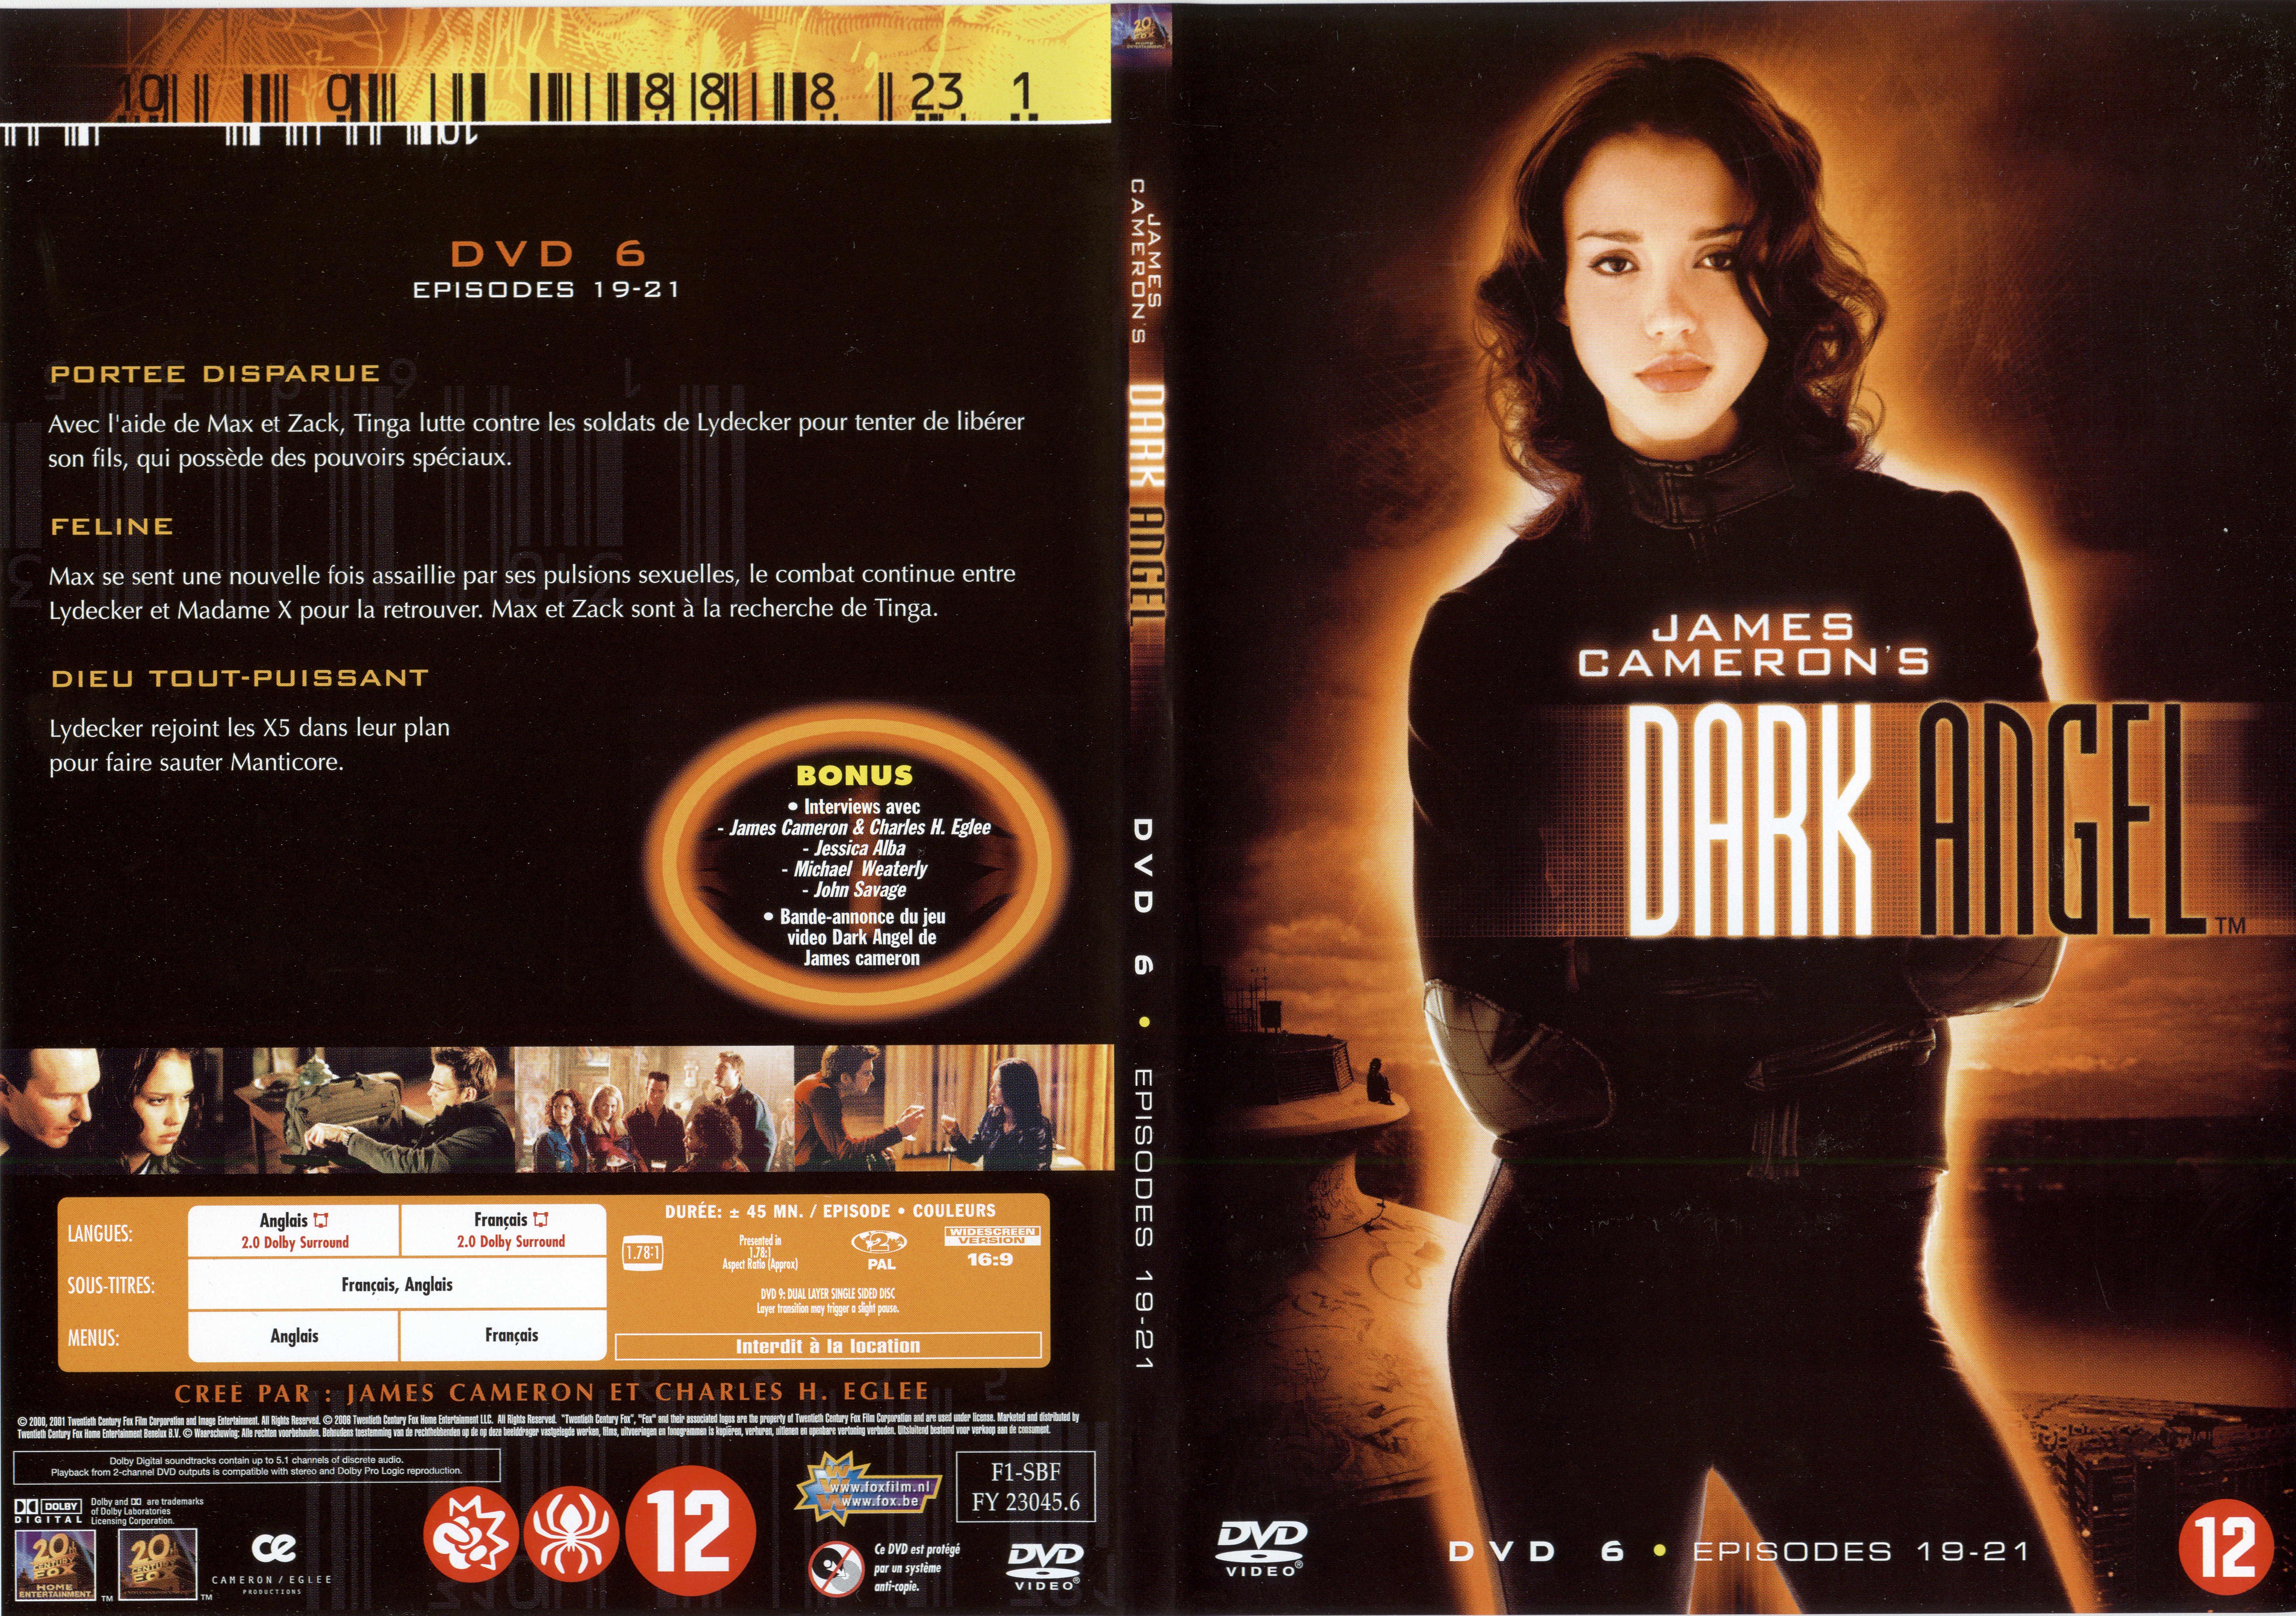 Jaquette DVD Dark Angel Saison 1 DVD 6 v2